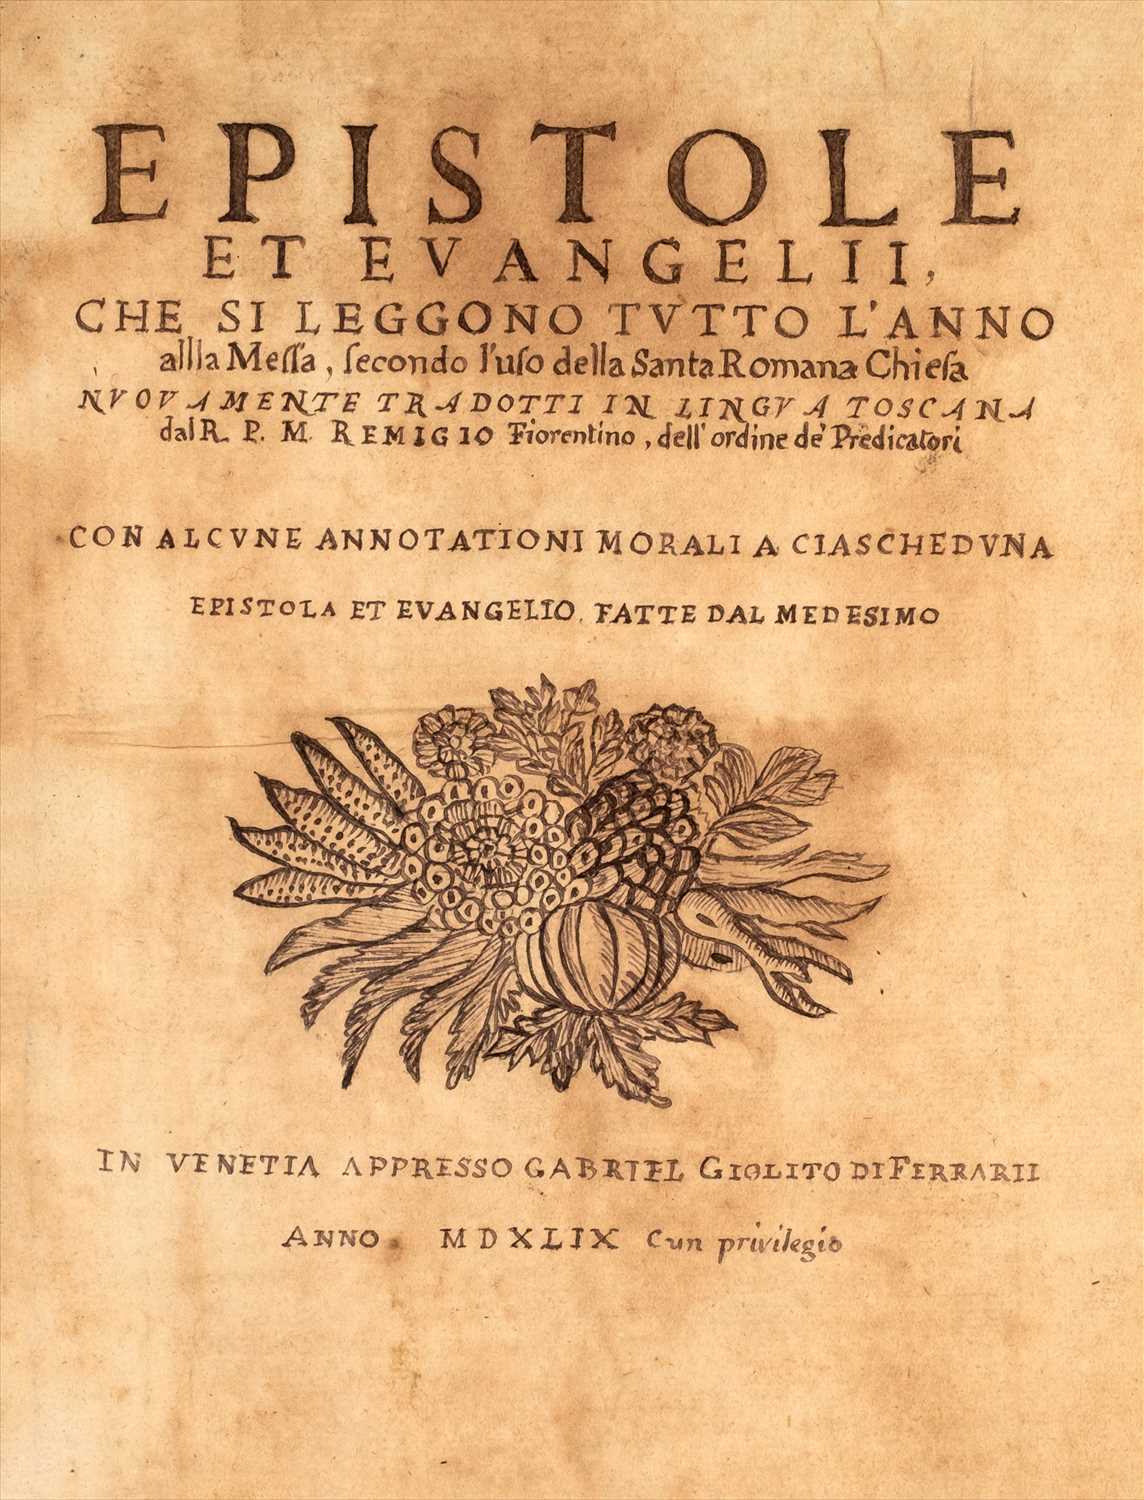 Lot 111 - Nannini (Remigio, translator). [Epistole et evangelii, Venice, 1569, & others